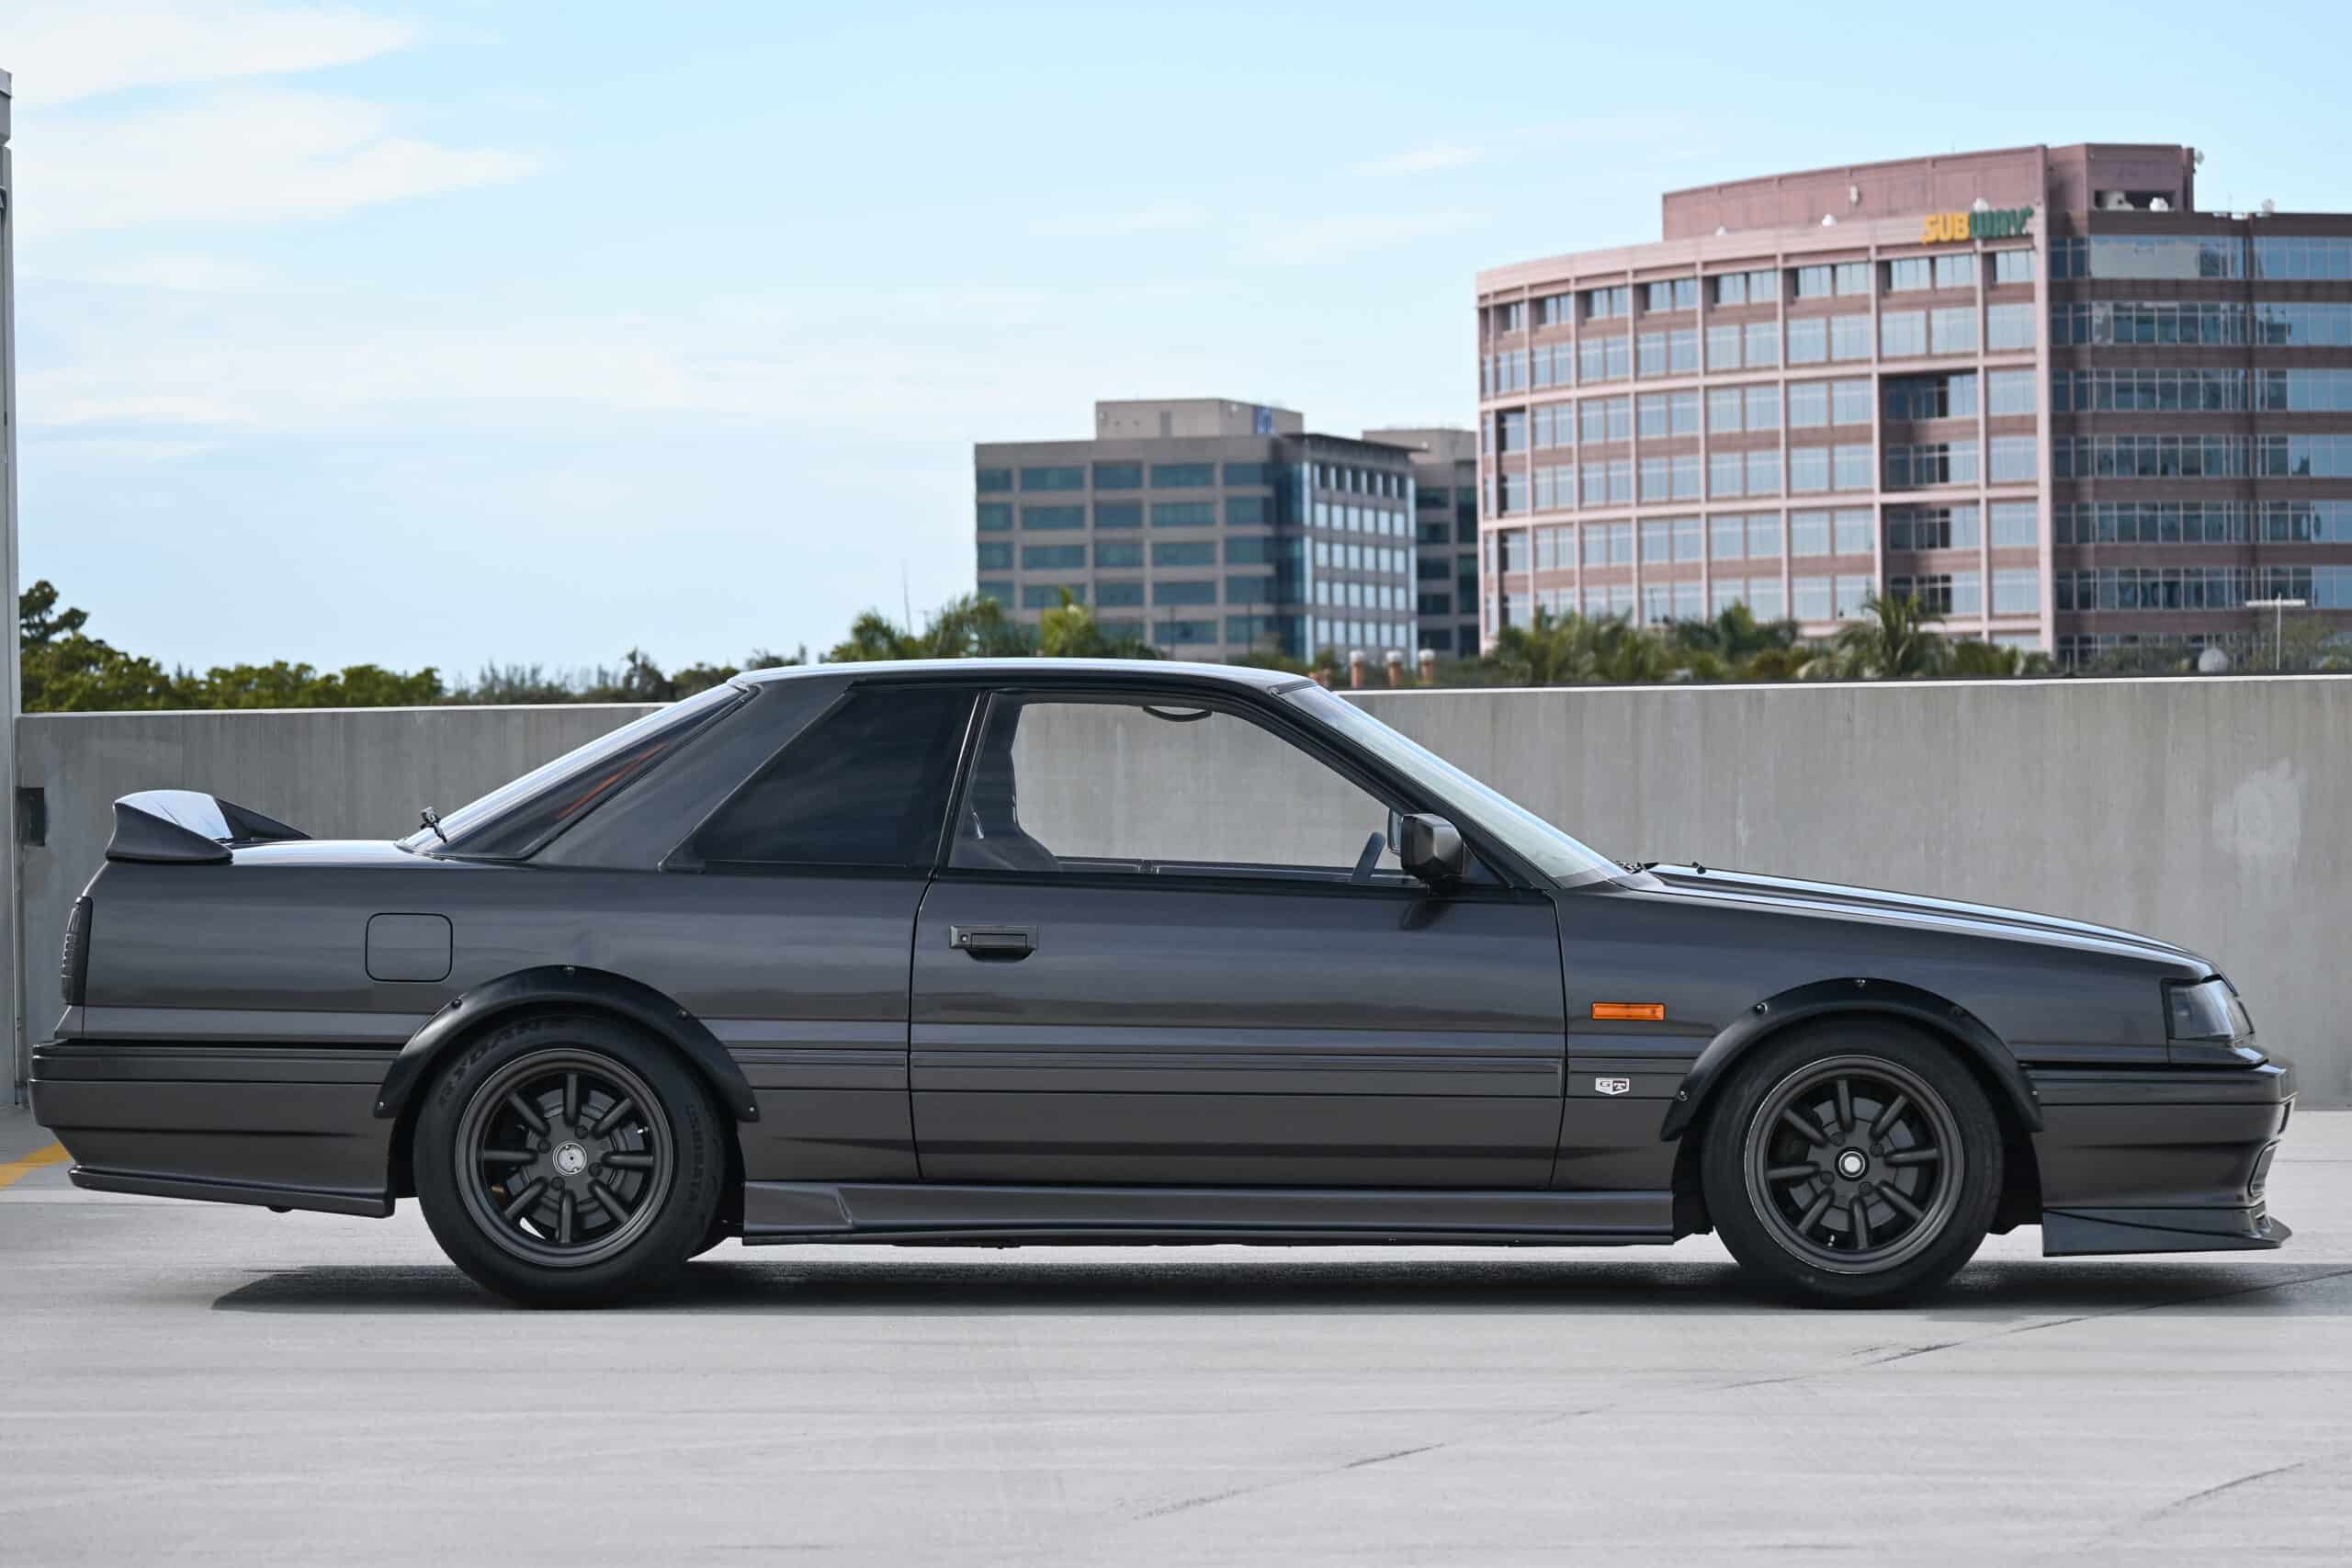 1988 Nissan Skyline GTS  Built/restored by R31 House | RB25det | Watanabe wheels | A/C